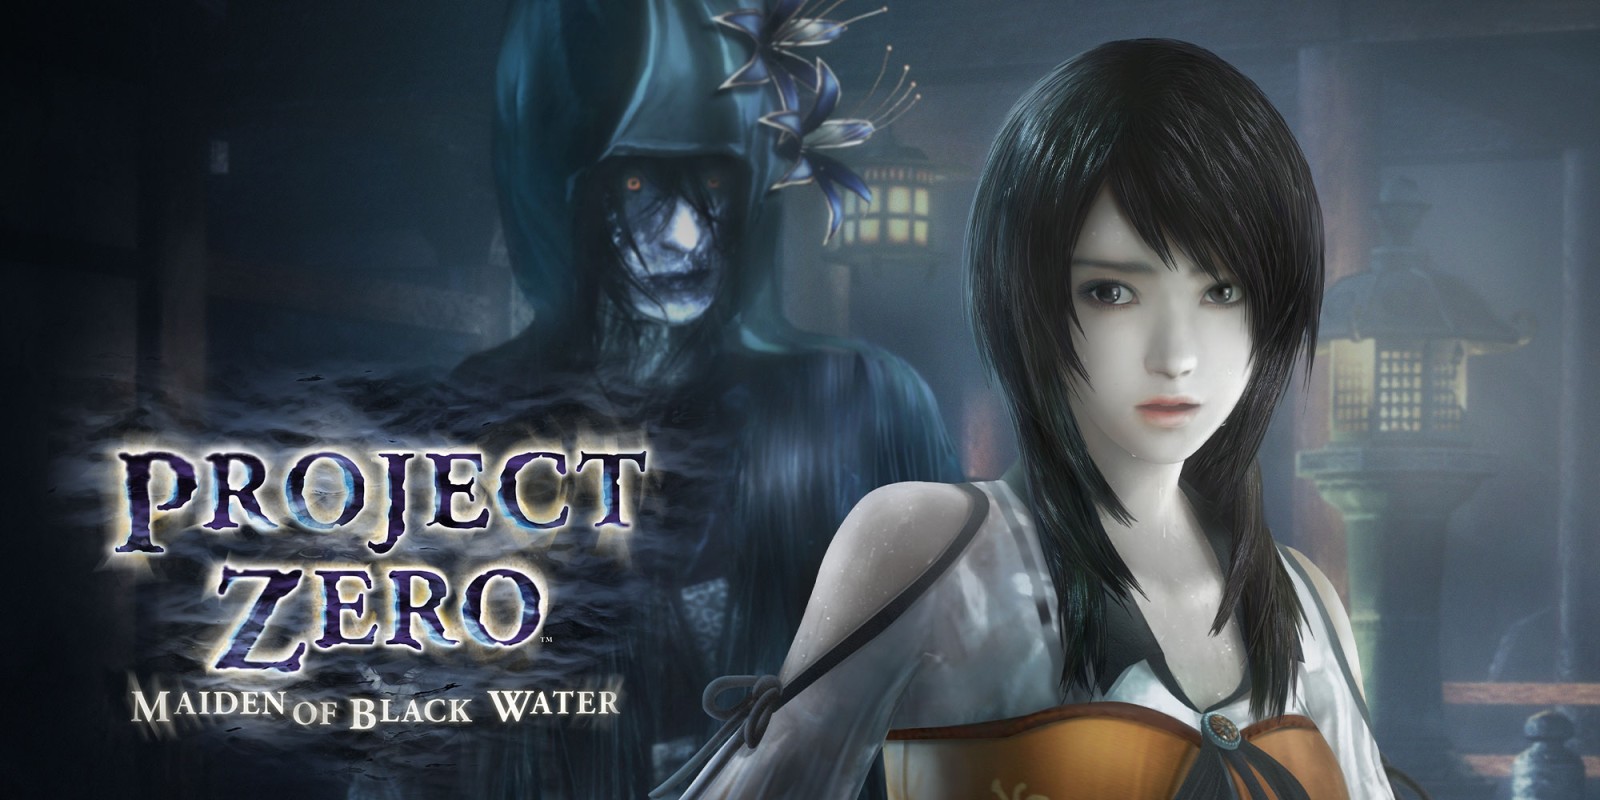 free download project zero black water